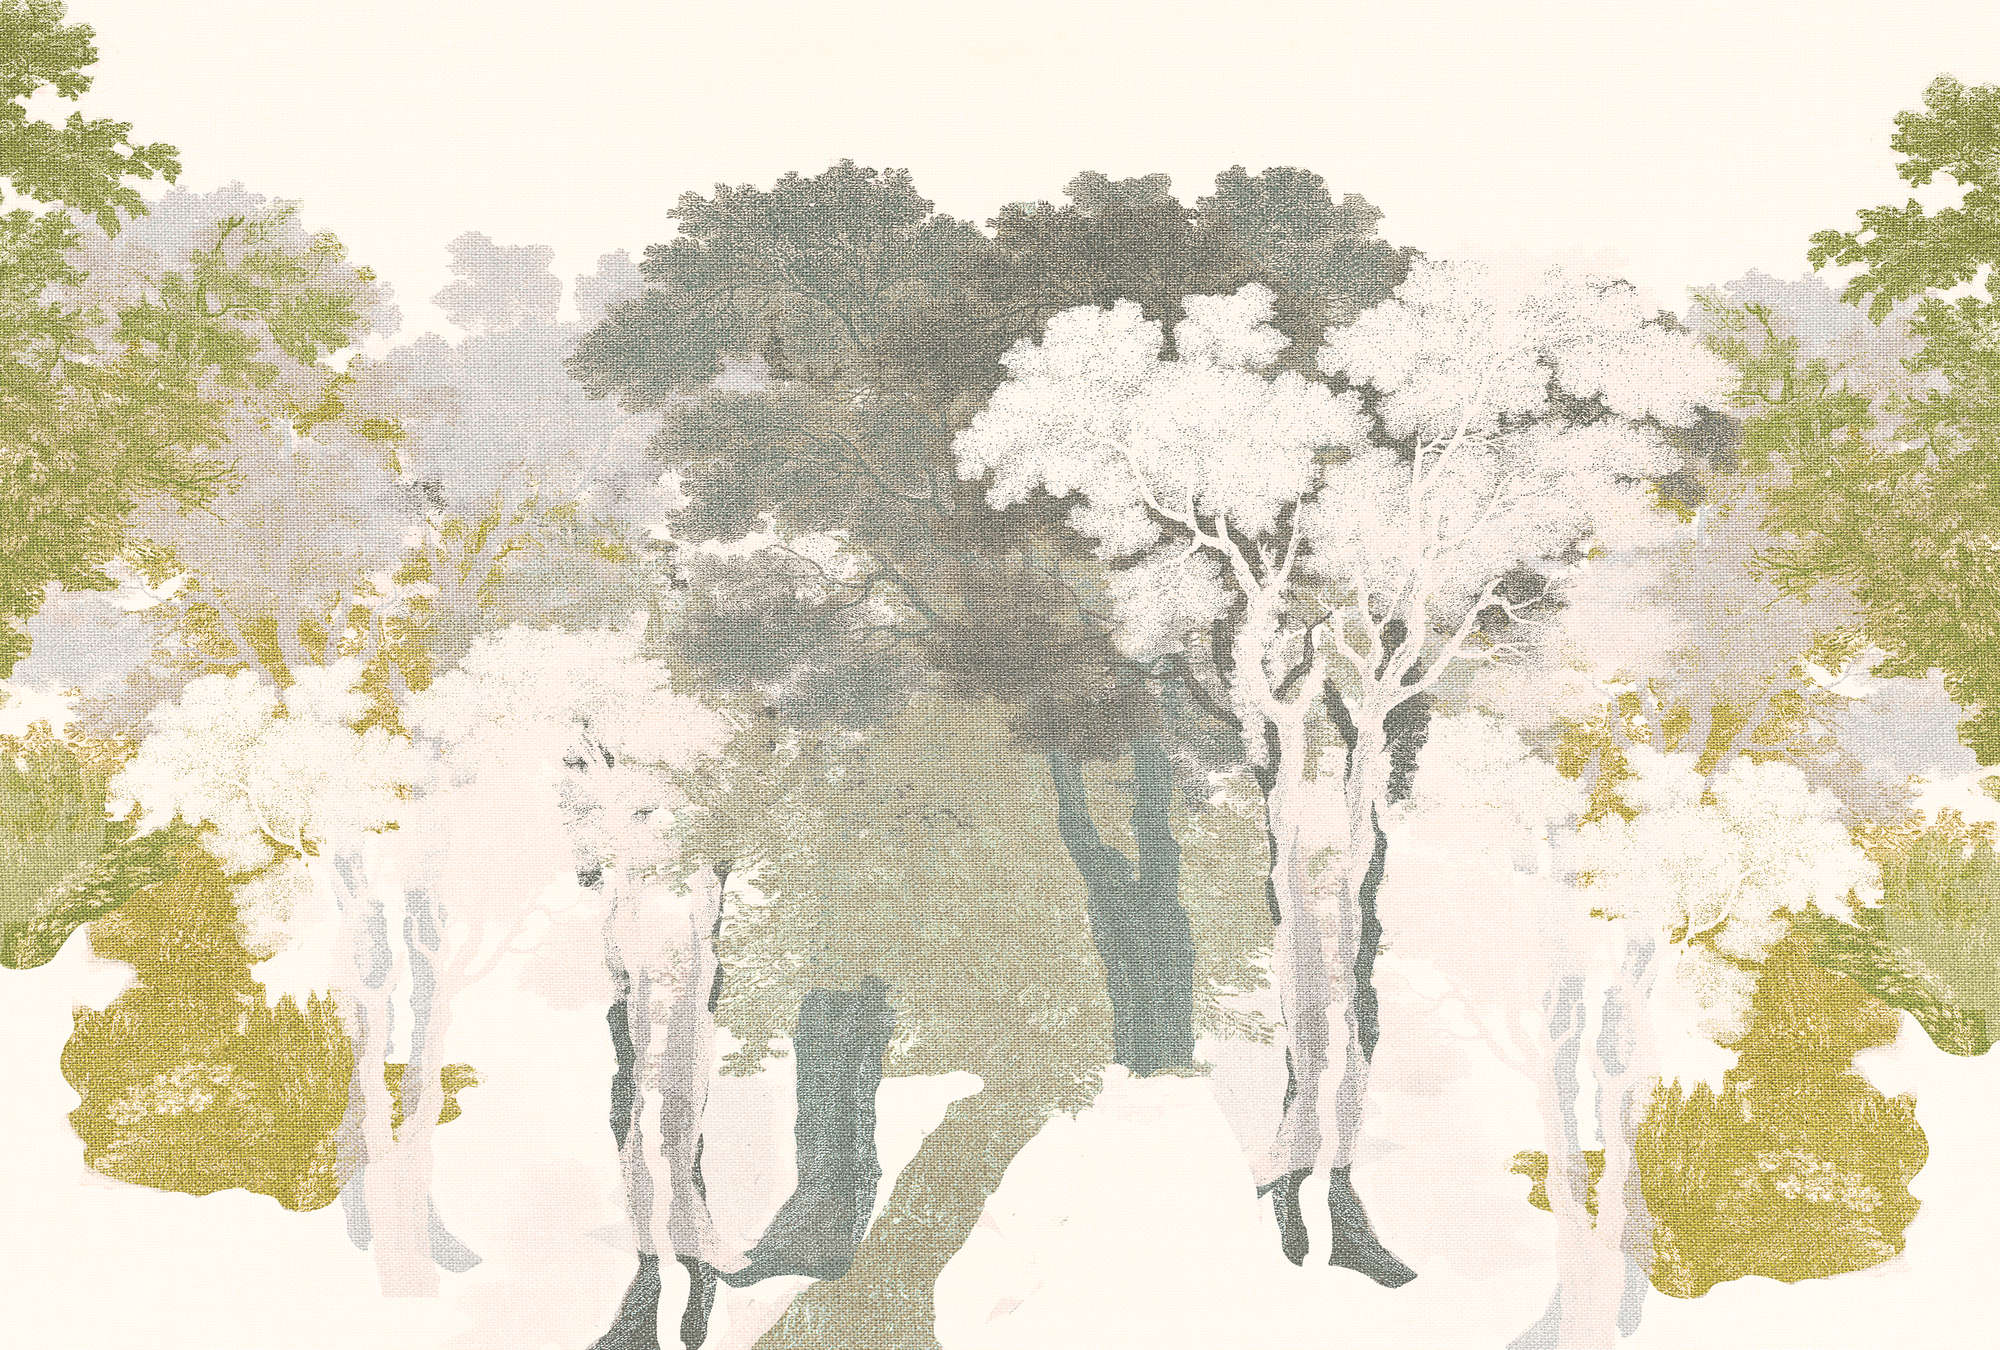             Fotomurali alberi, design foresta e look lino - Verde, grigio, bianco
        